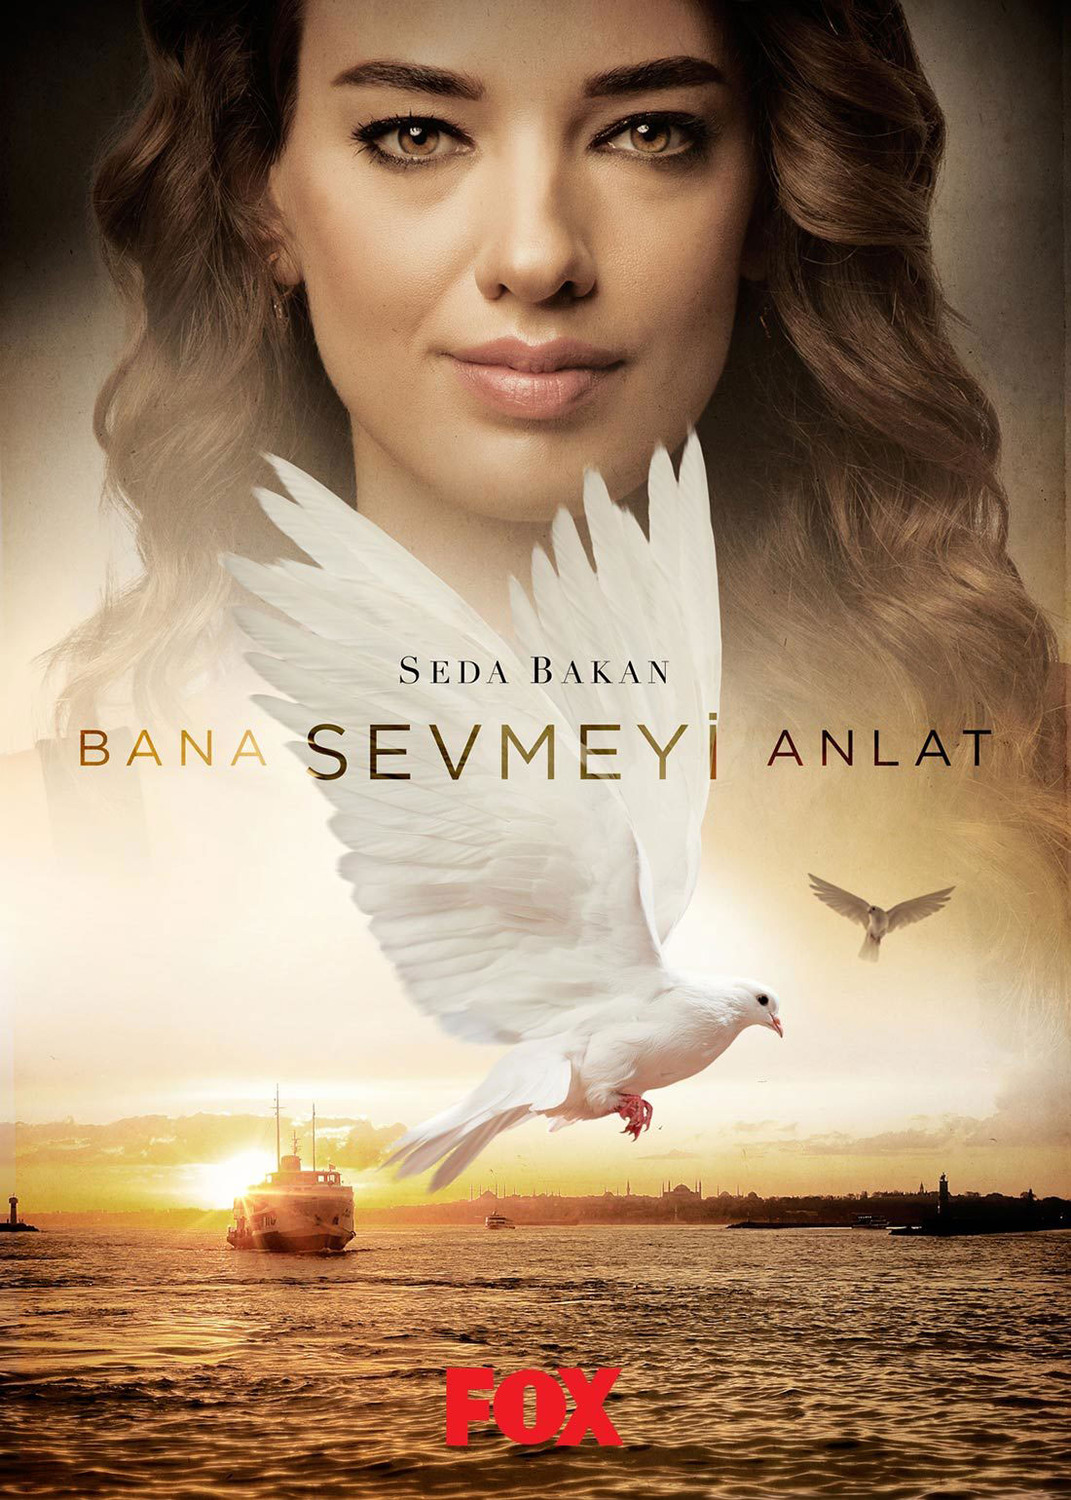 Extra Large TV Poster Image for Bana Sevmeyi Anlat (#2 of 4)